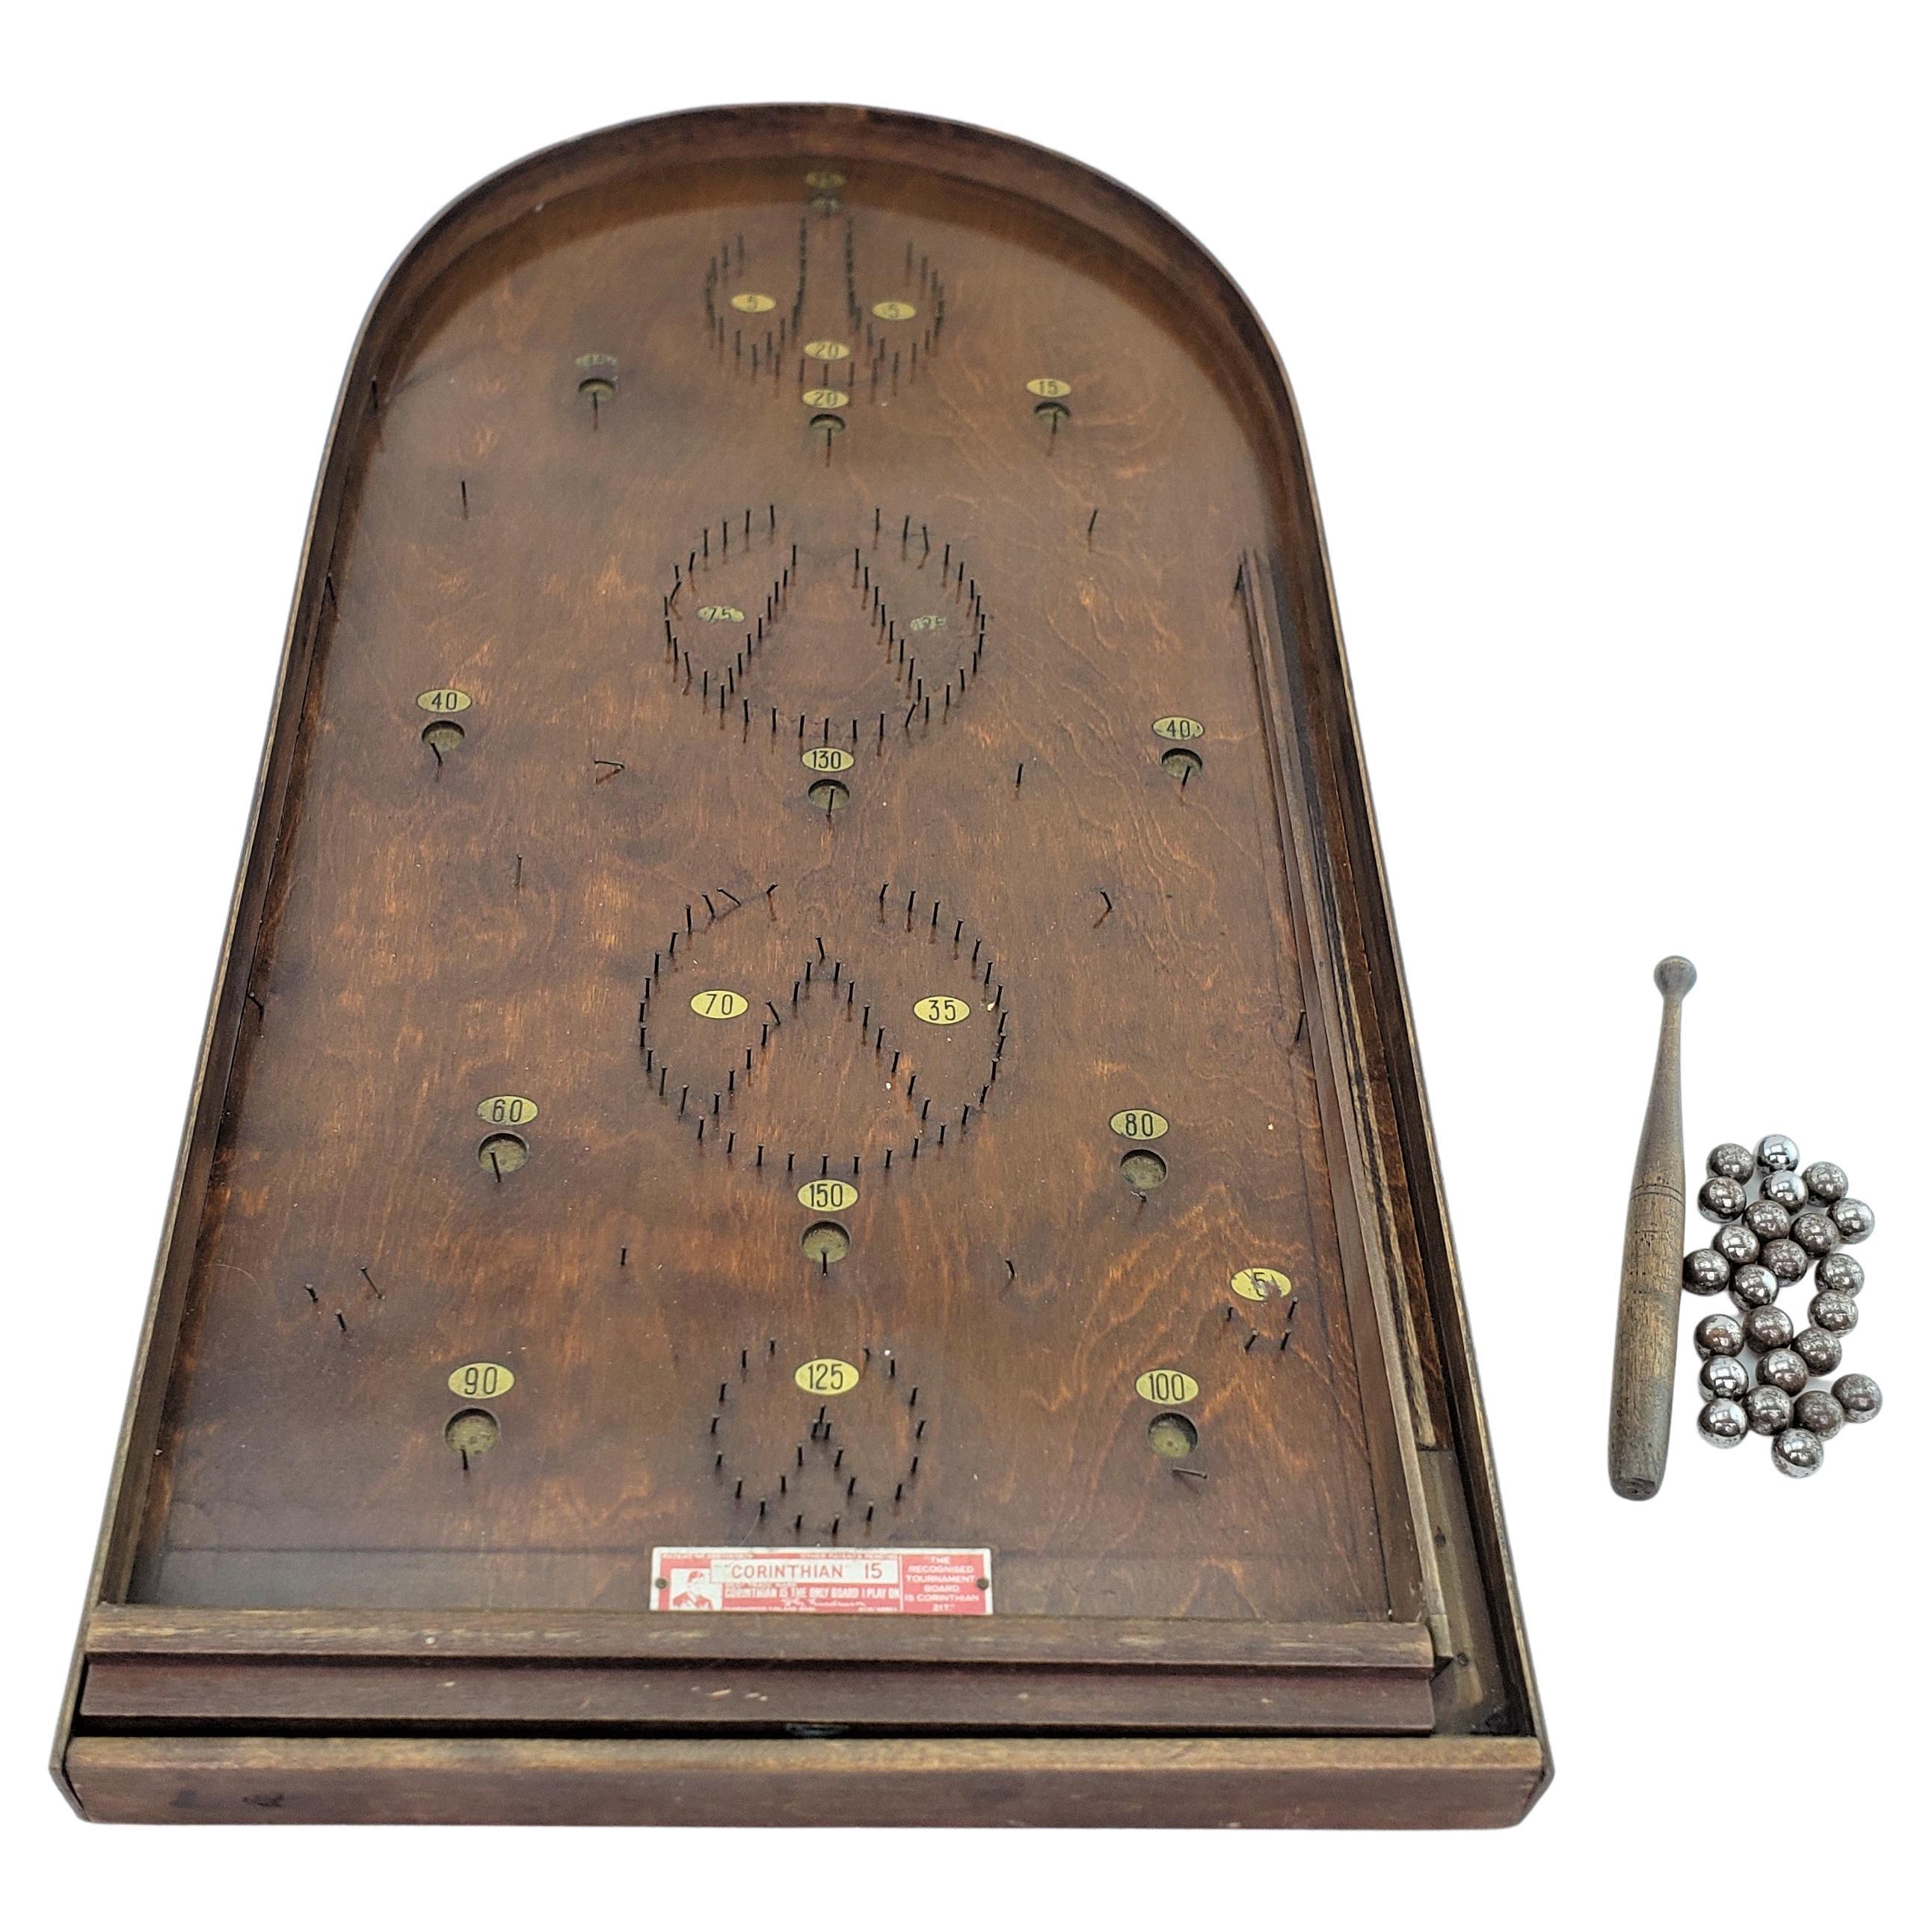 Antique "Corinthian 15" Wooden Table Top Bagatelle Board Game Set For Sale